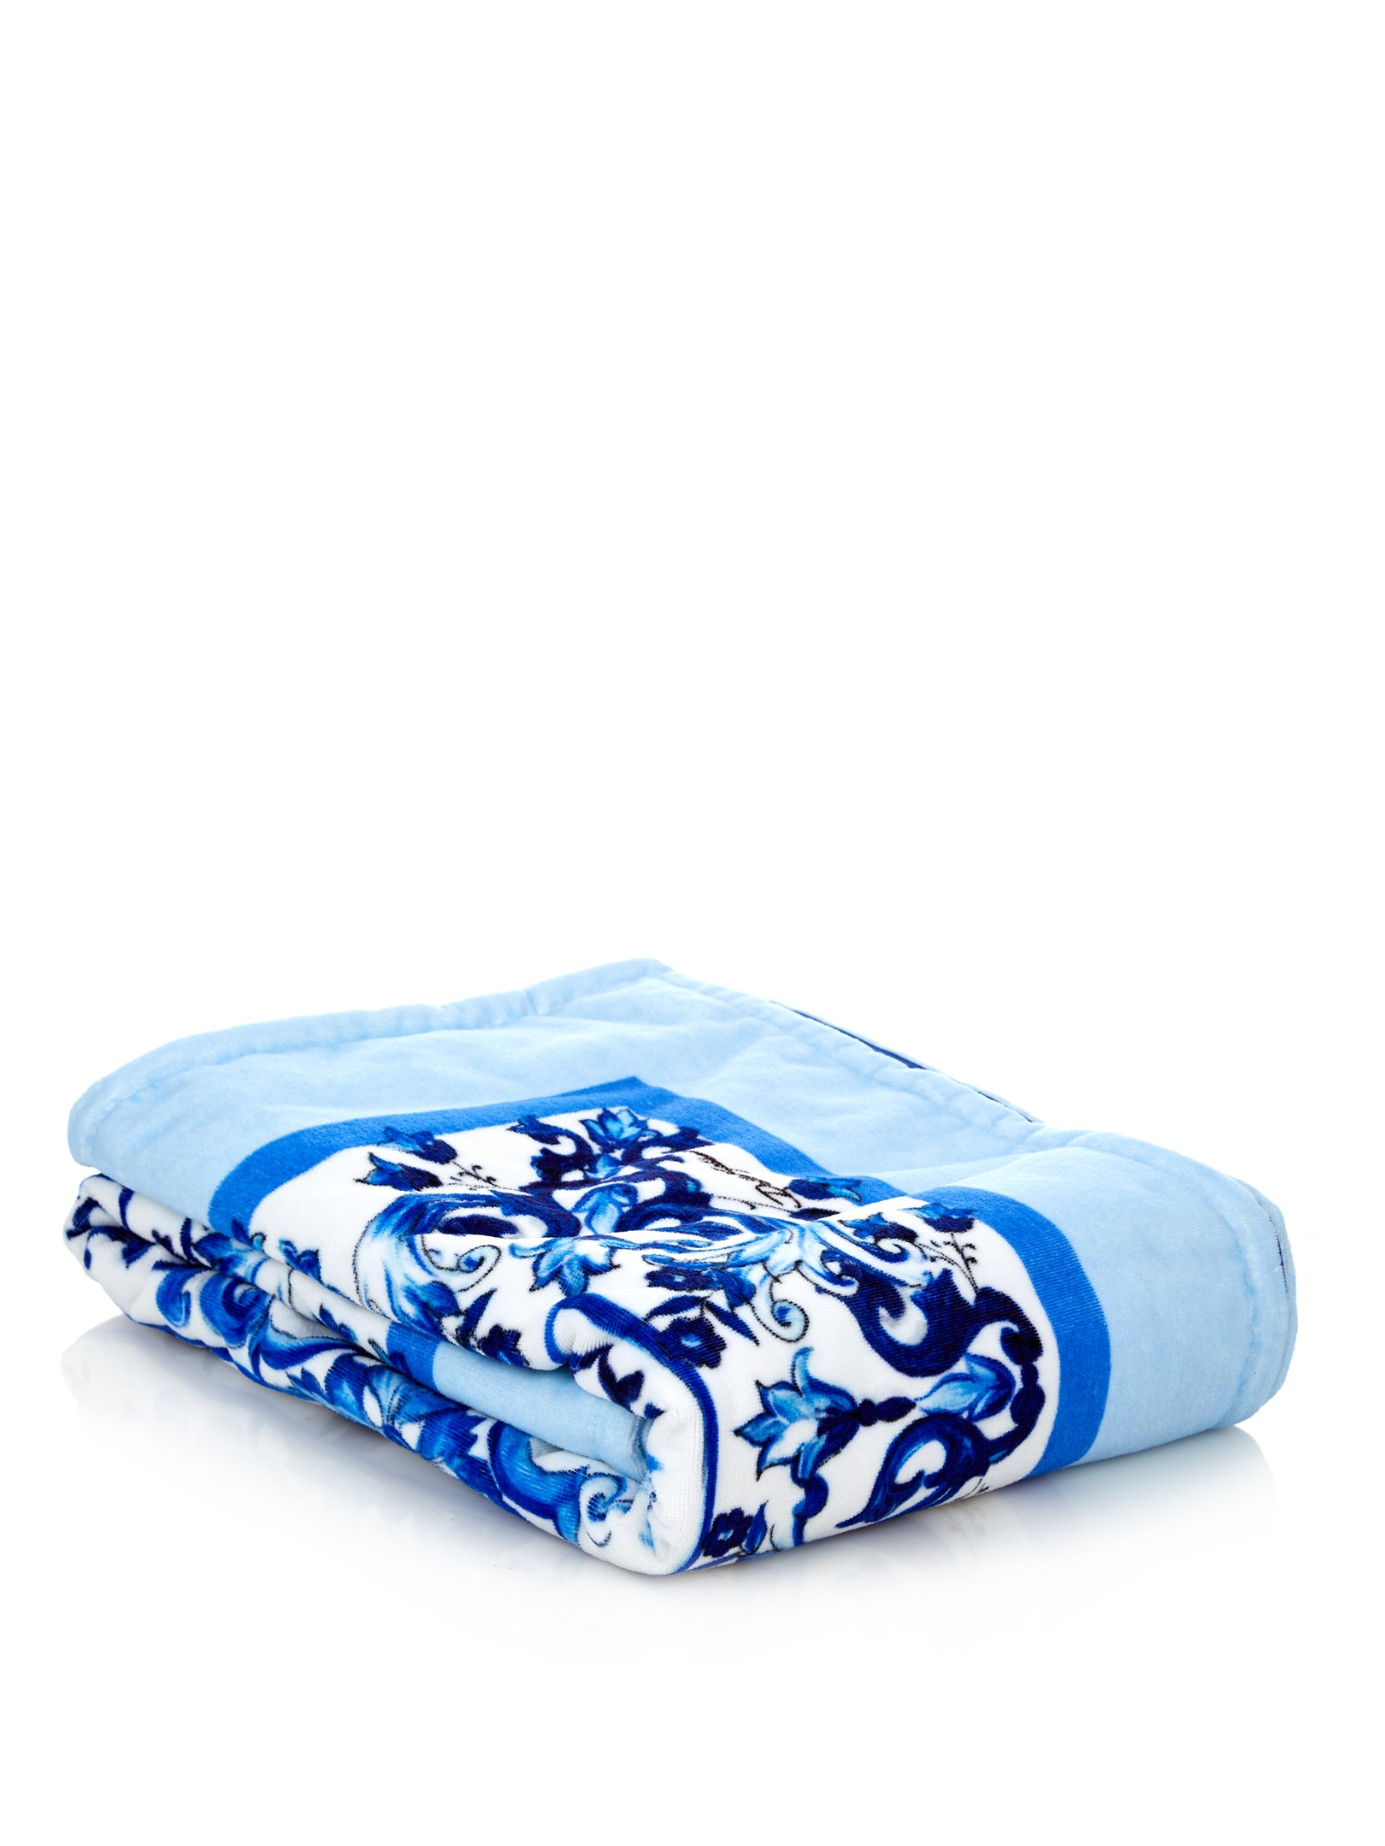 Dolce & Gabbana Majolica-Print Towel in Blue | Lyst